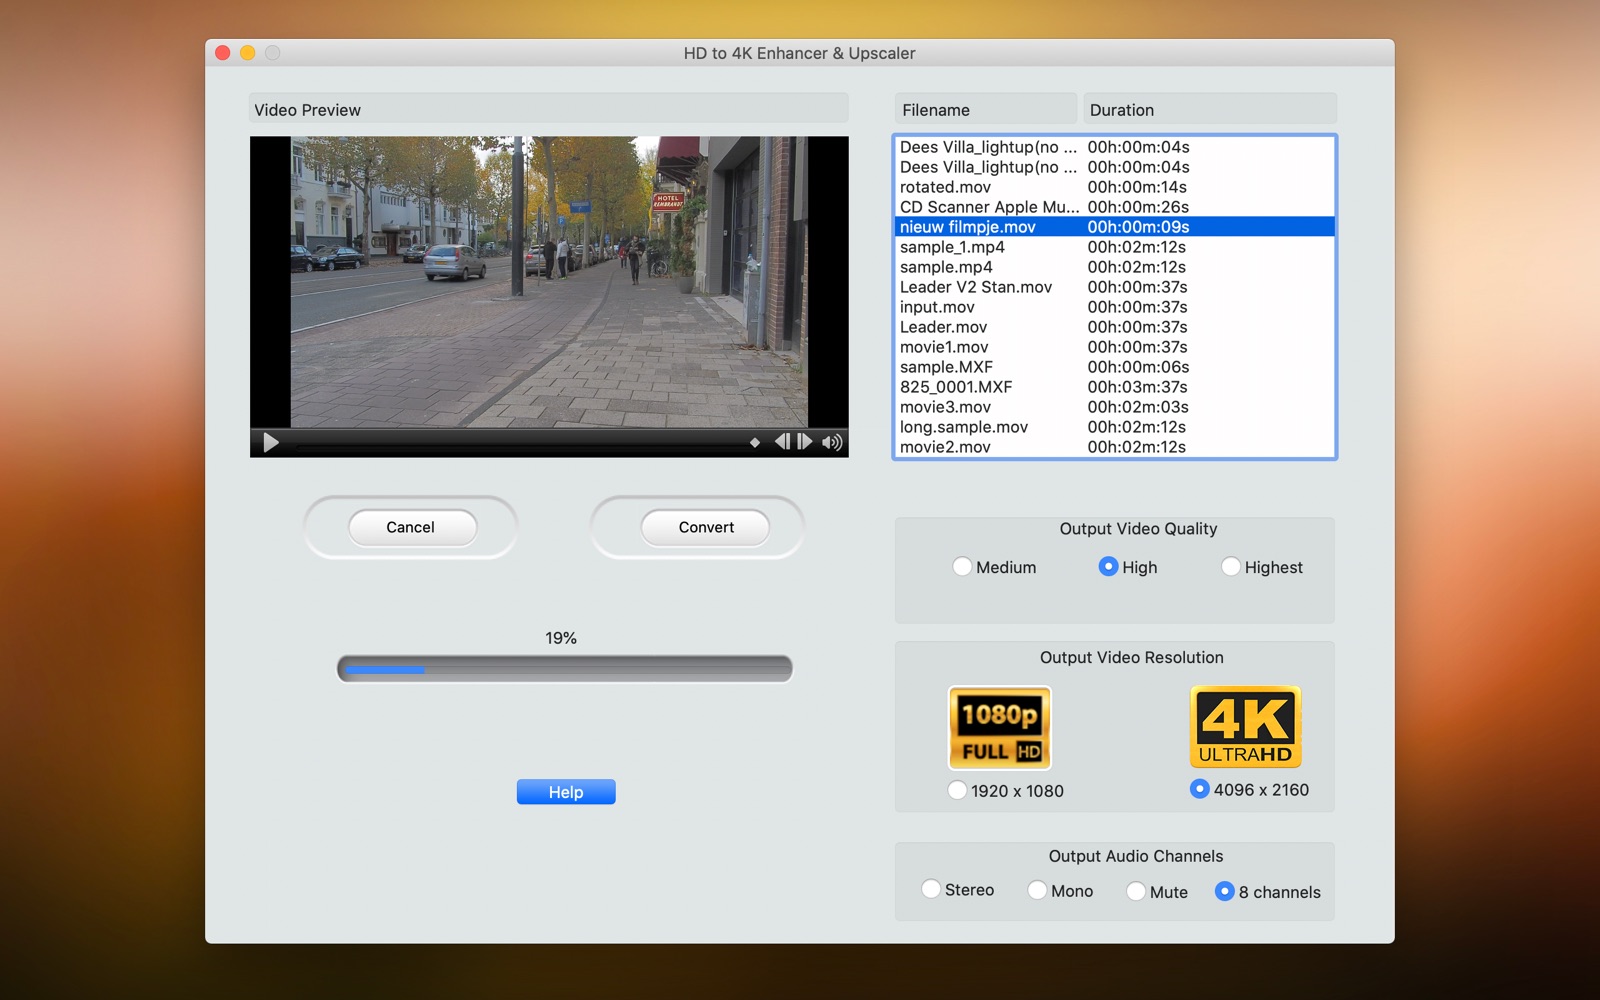 HD to 4K Video Upscaler & Enhancer 1.0 : Main Window